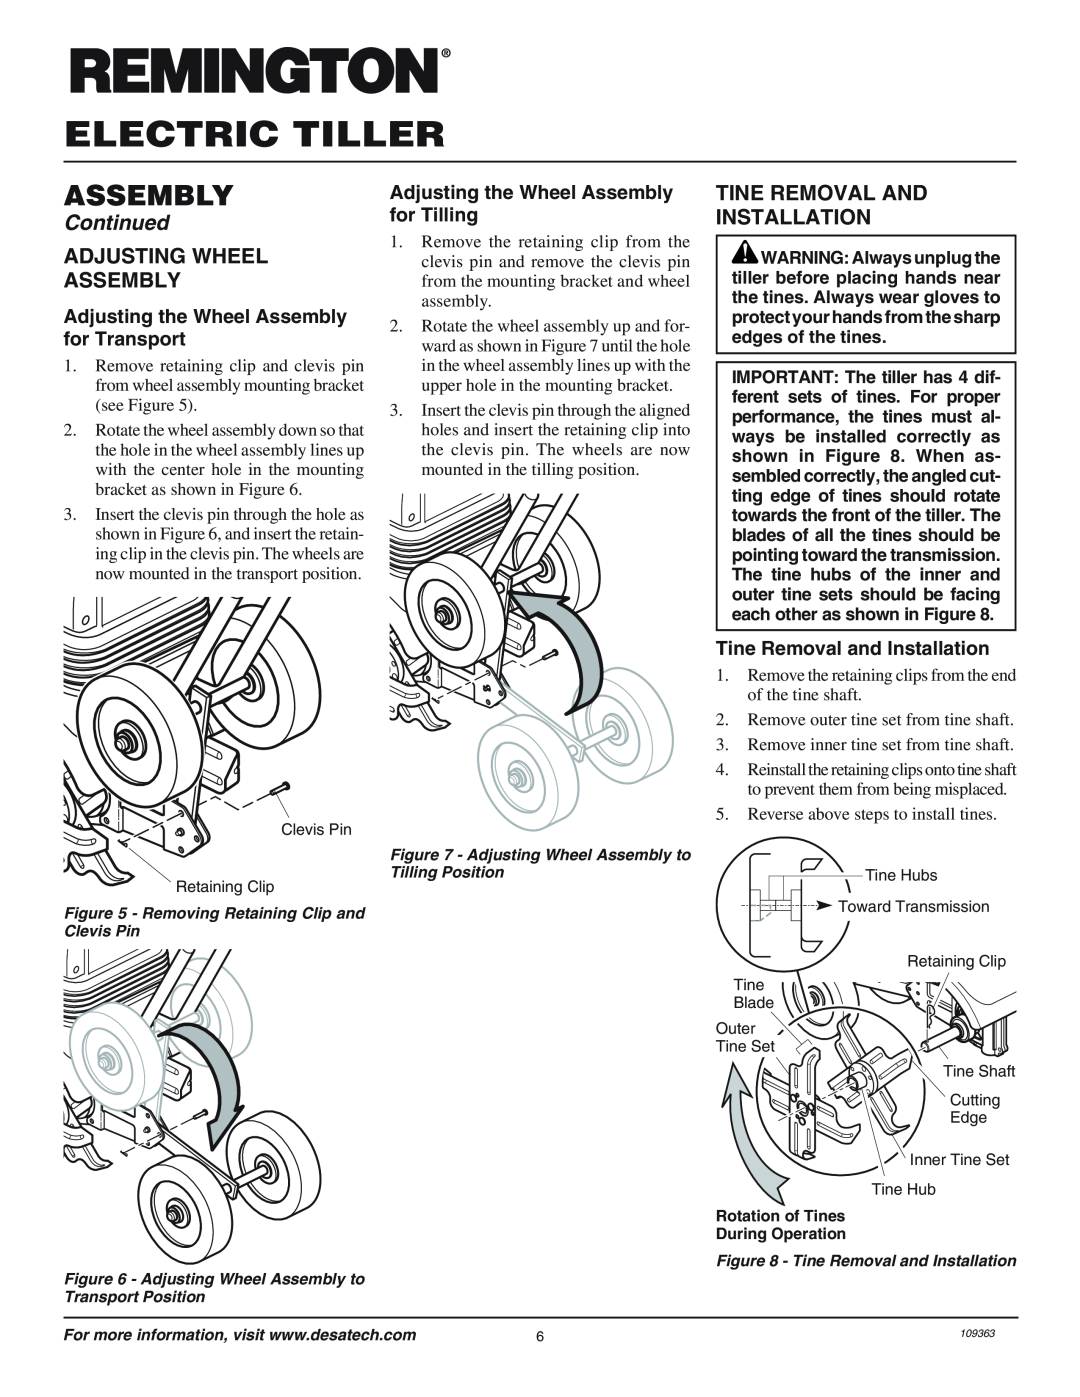 Remington 109312-01 Adjusting Wheel Assembly, Tine Removal And Installation, Adjusting the Wheel Assembly for Transport 